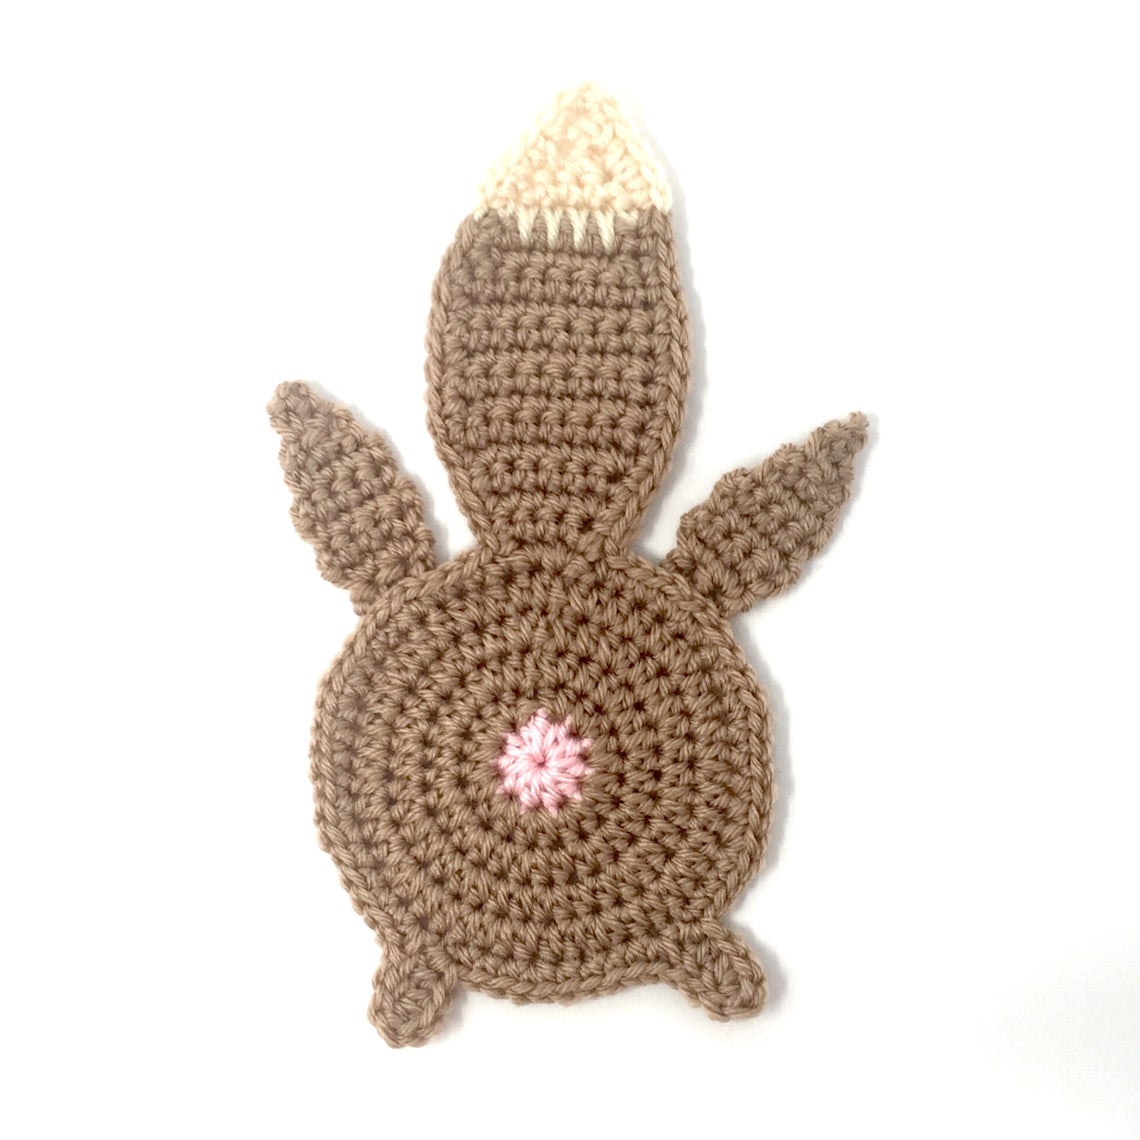 Pokemon Butt Coasters Crochet Patterns